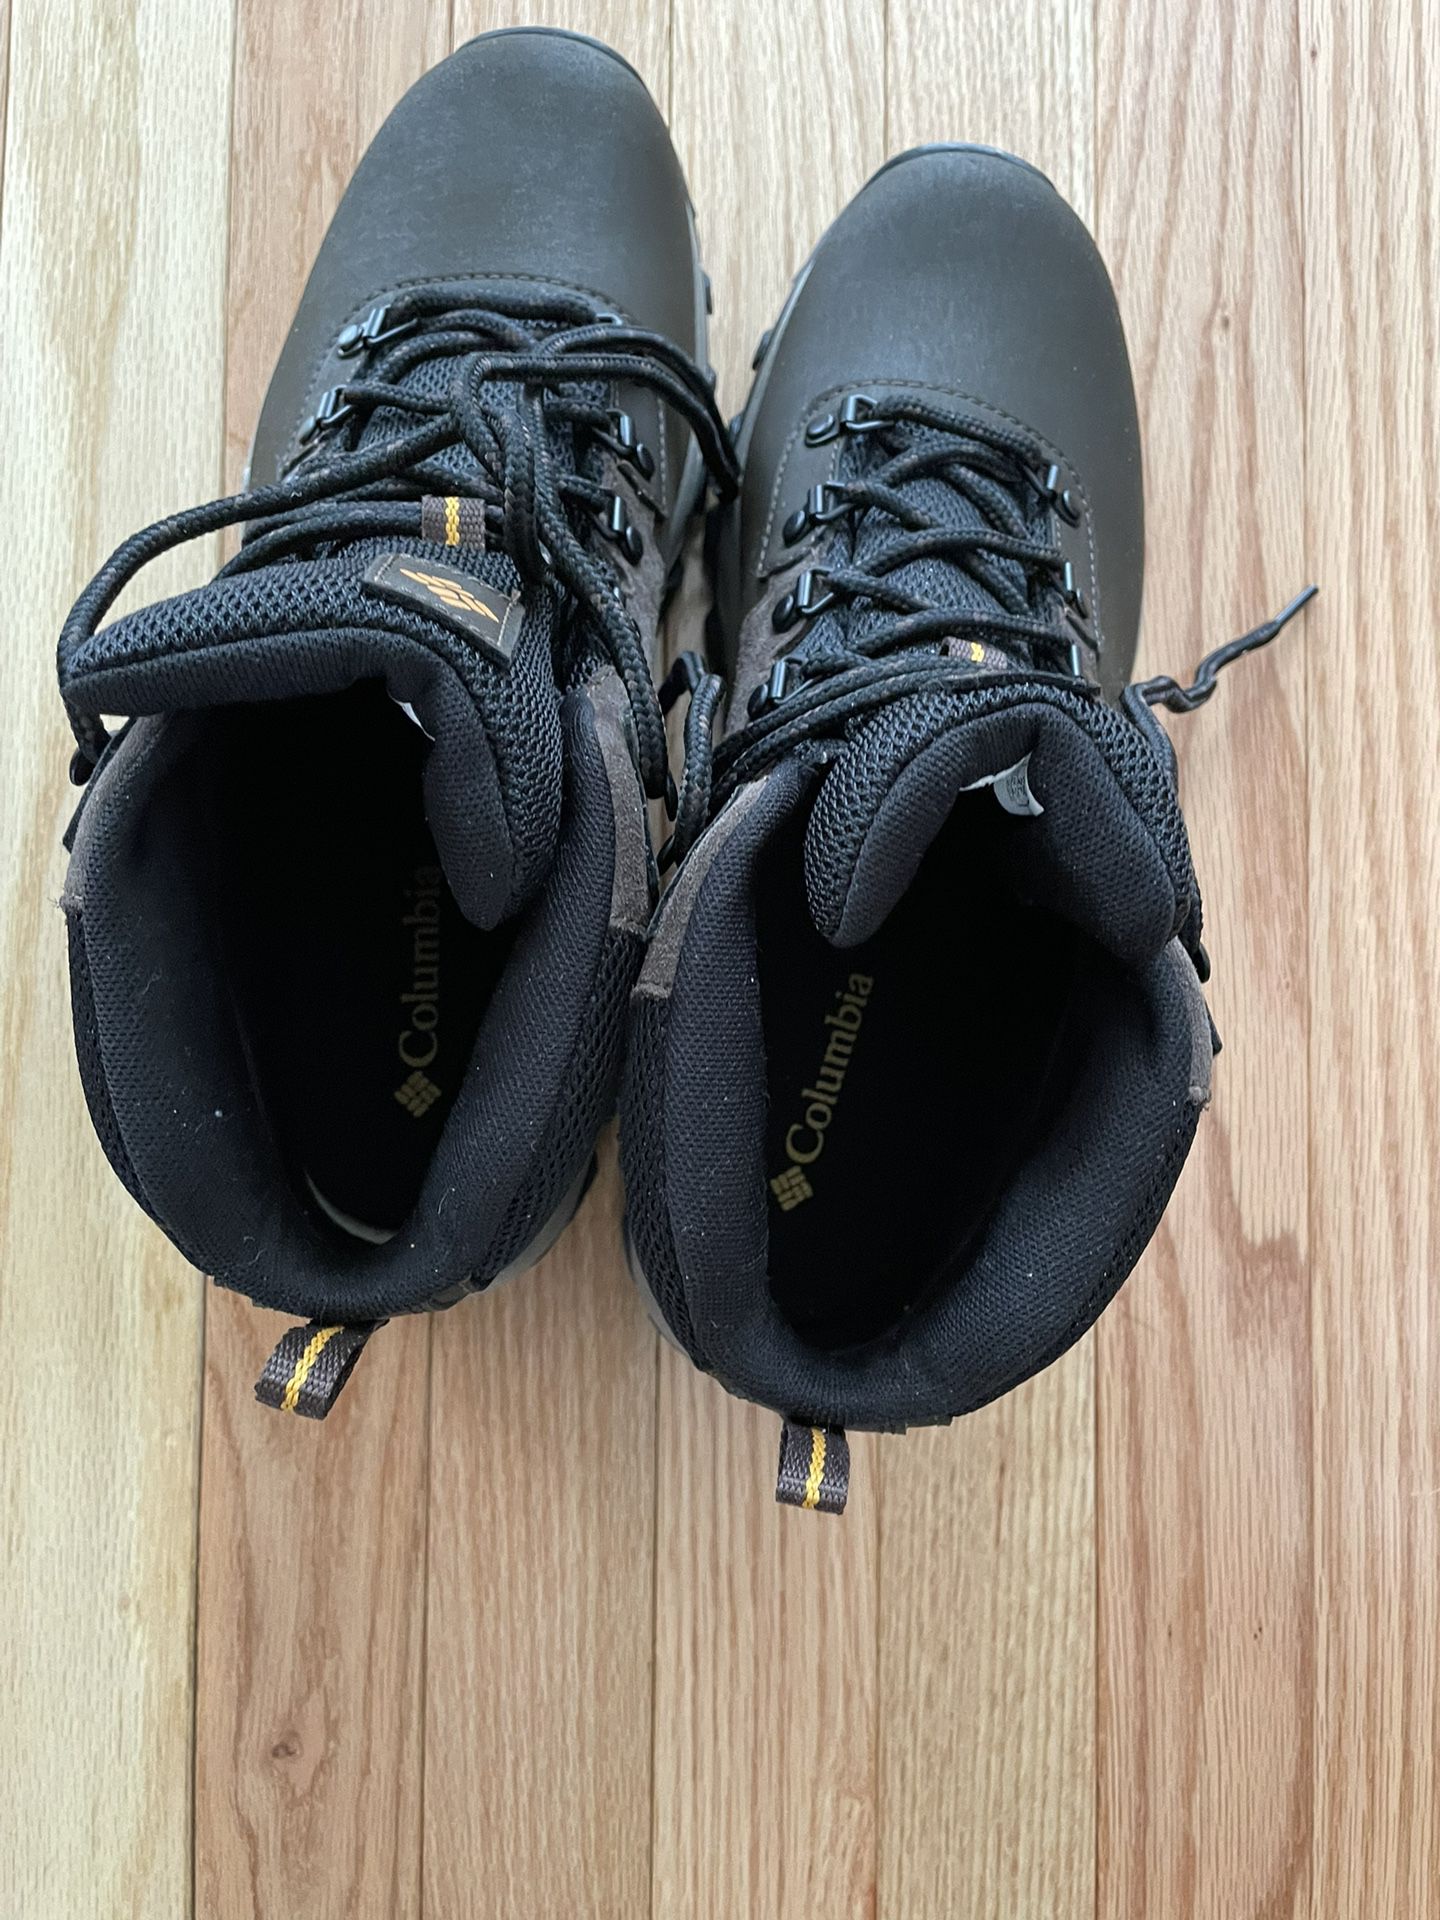 Men’s Columbia Size 9 Waterproof Hiking Boots! New!